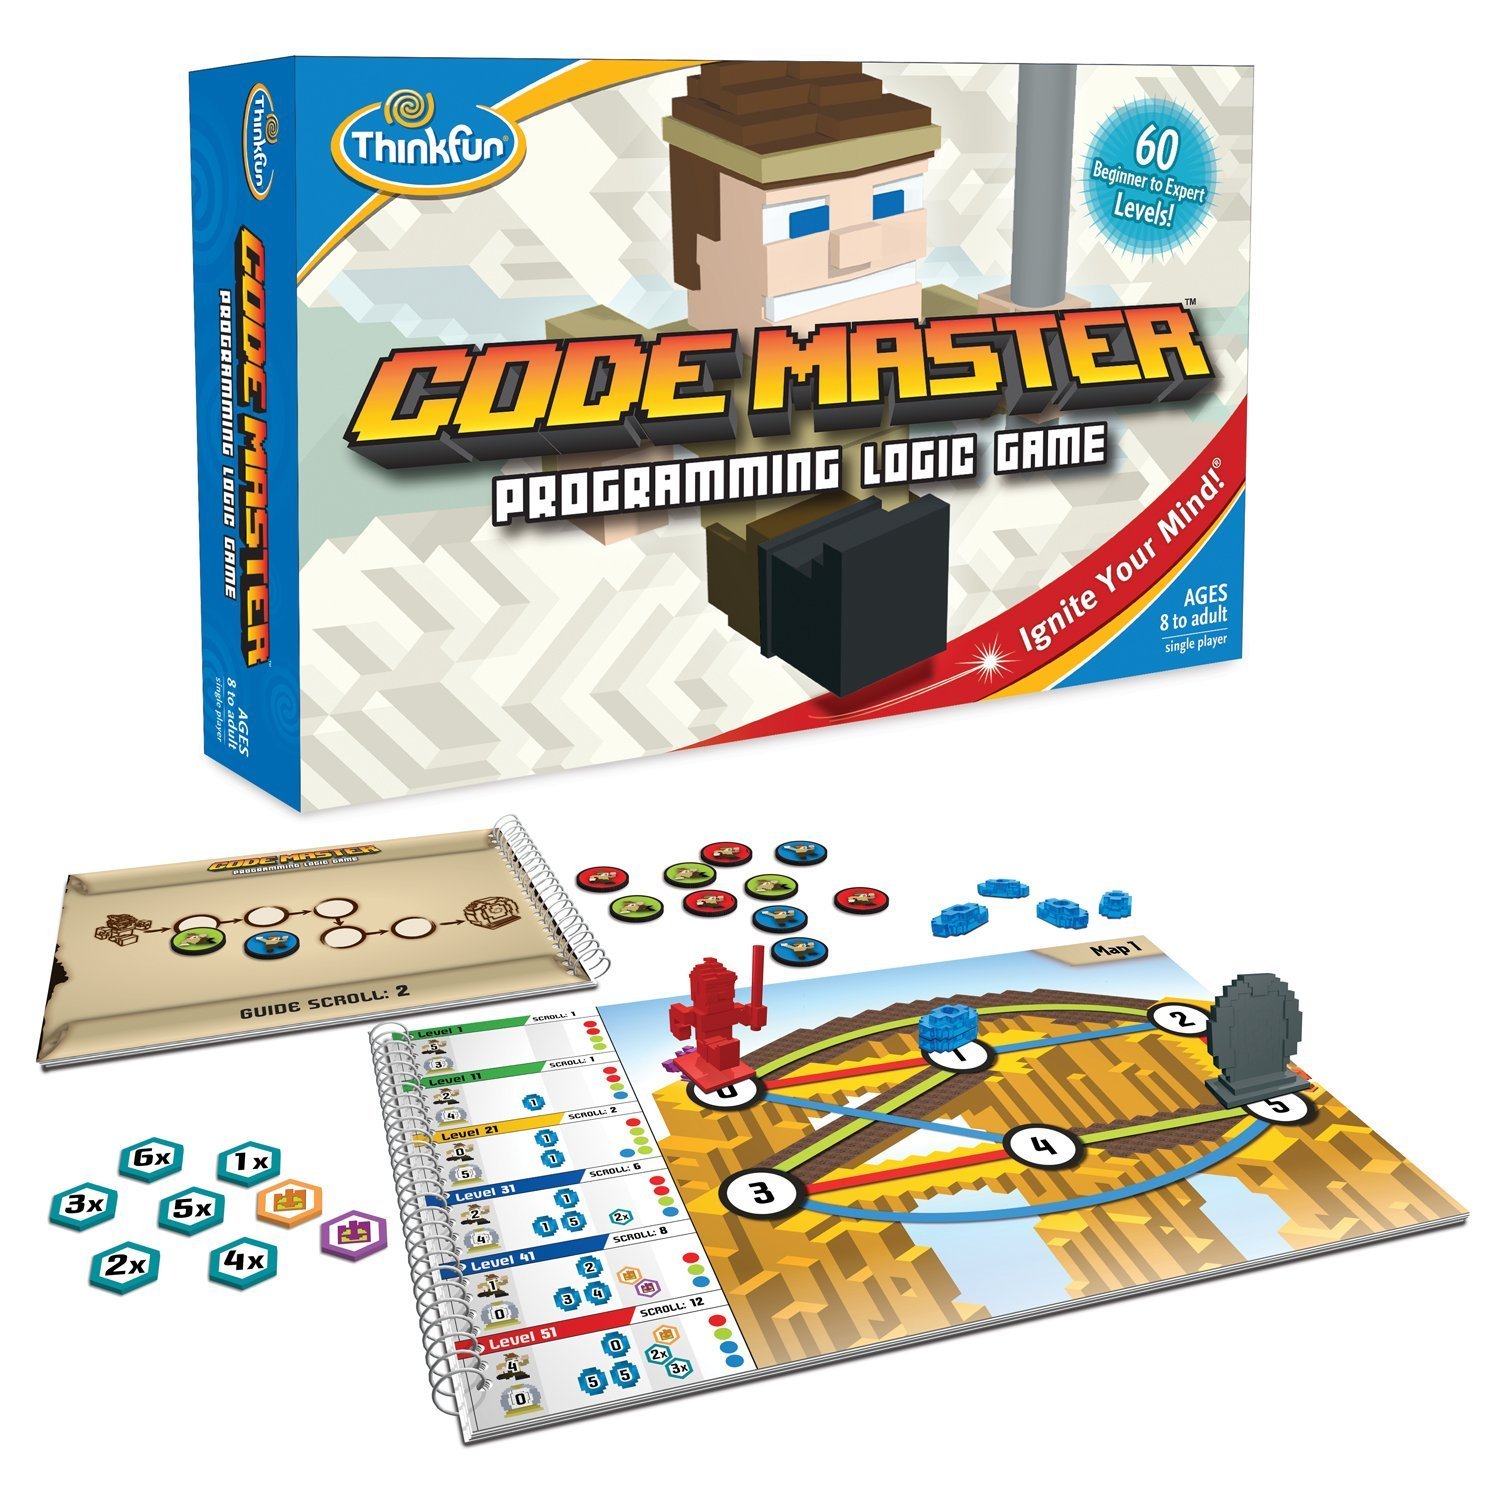 STEM board games for coding